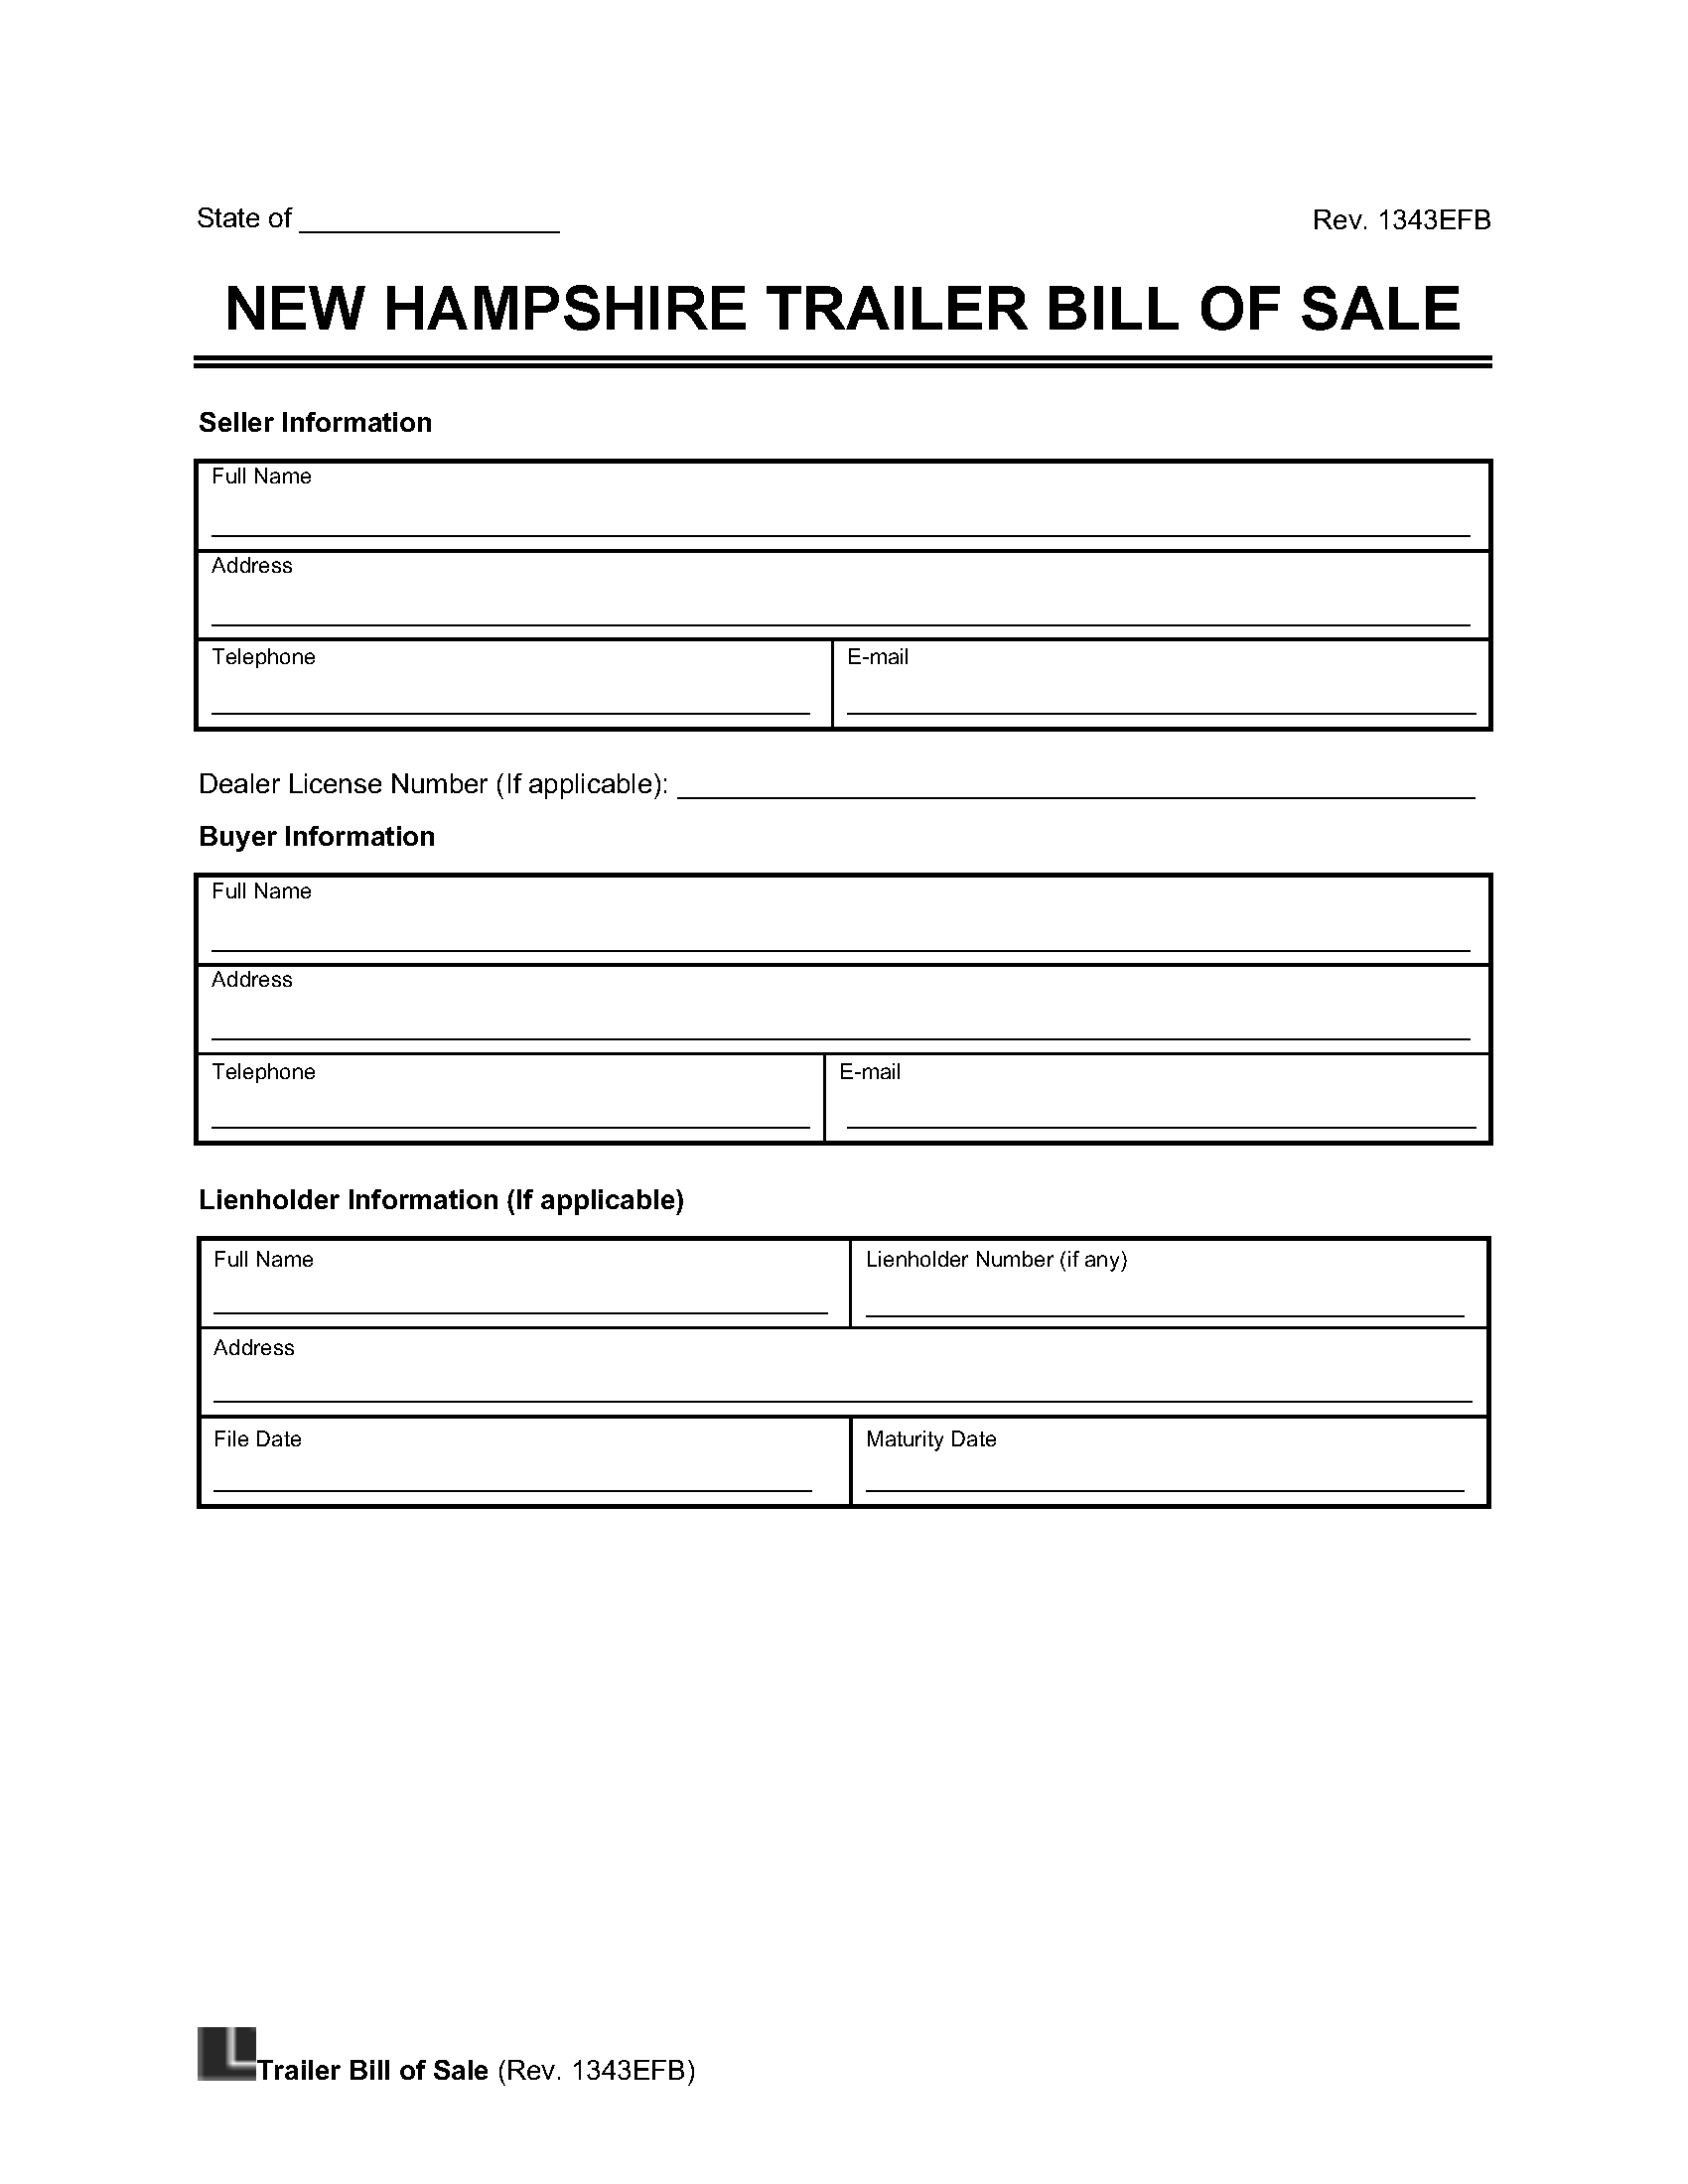 New Hampshire Trailer Bill of Sale Screenshot